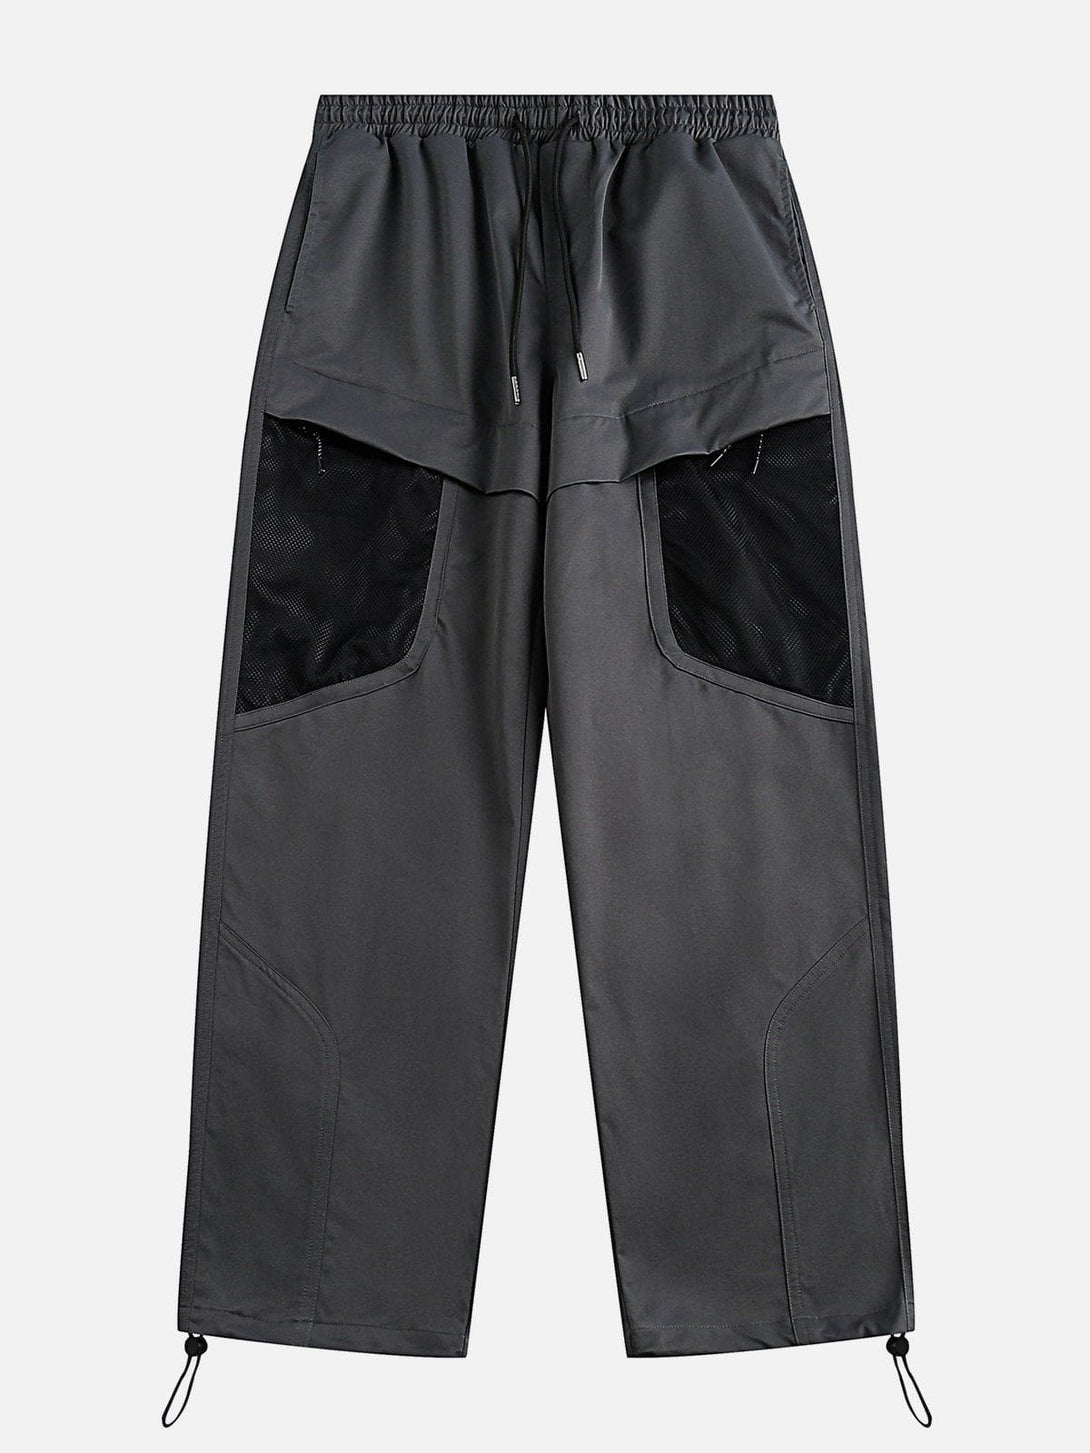 Majesda® - Mesh Pocket Cargo Pants outfit ideas streetwear fashion